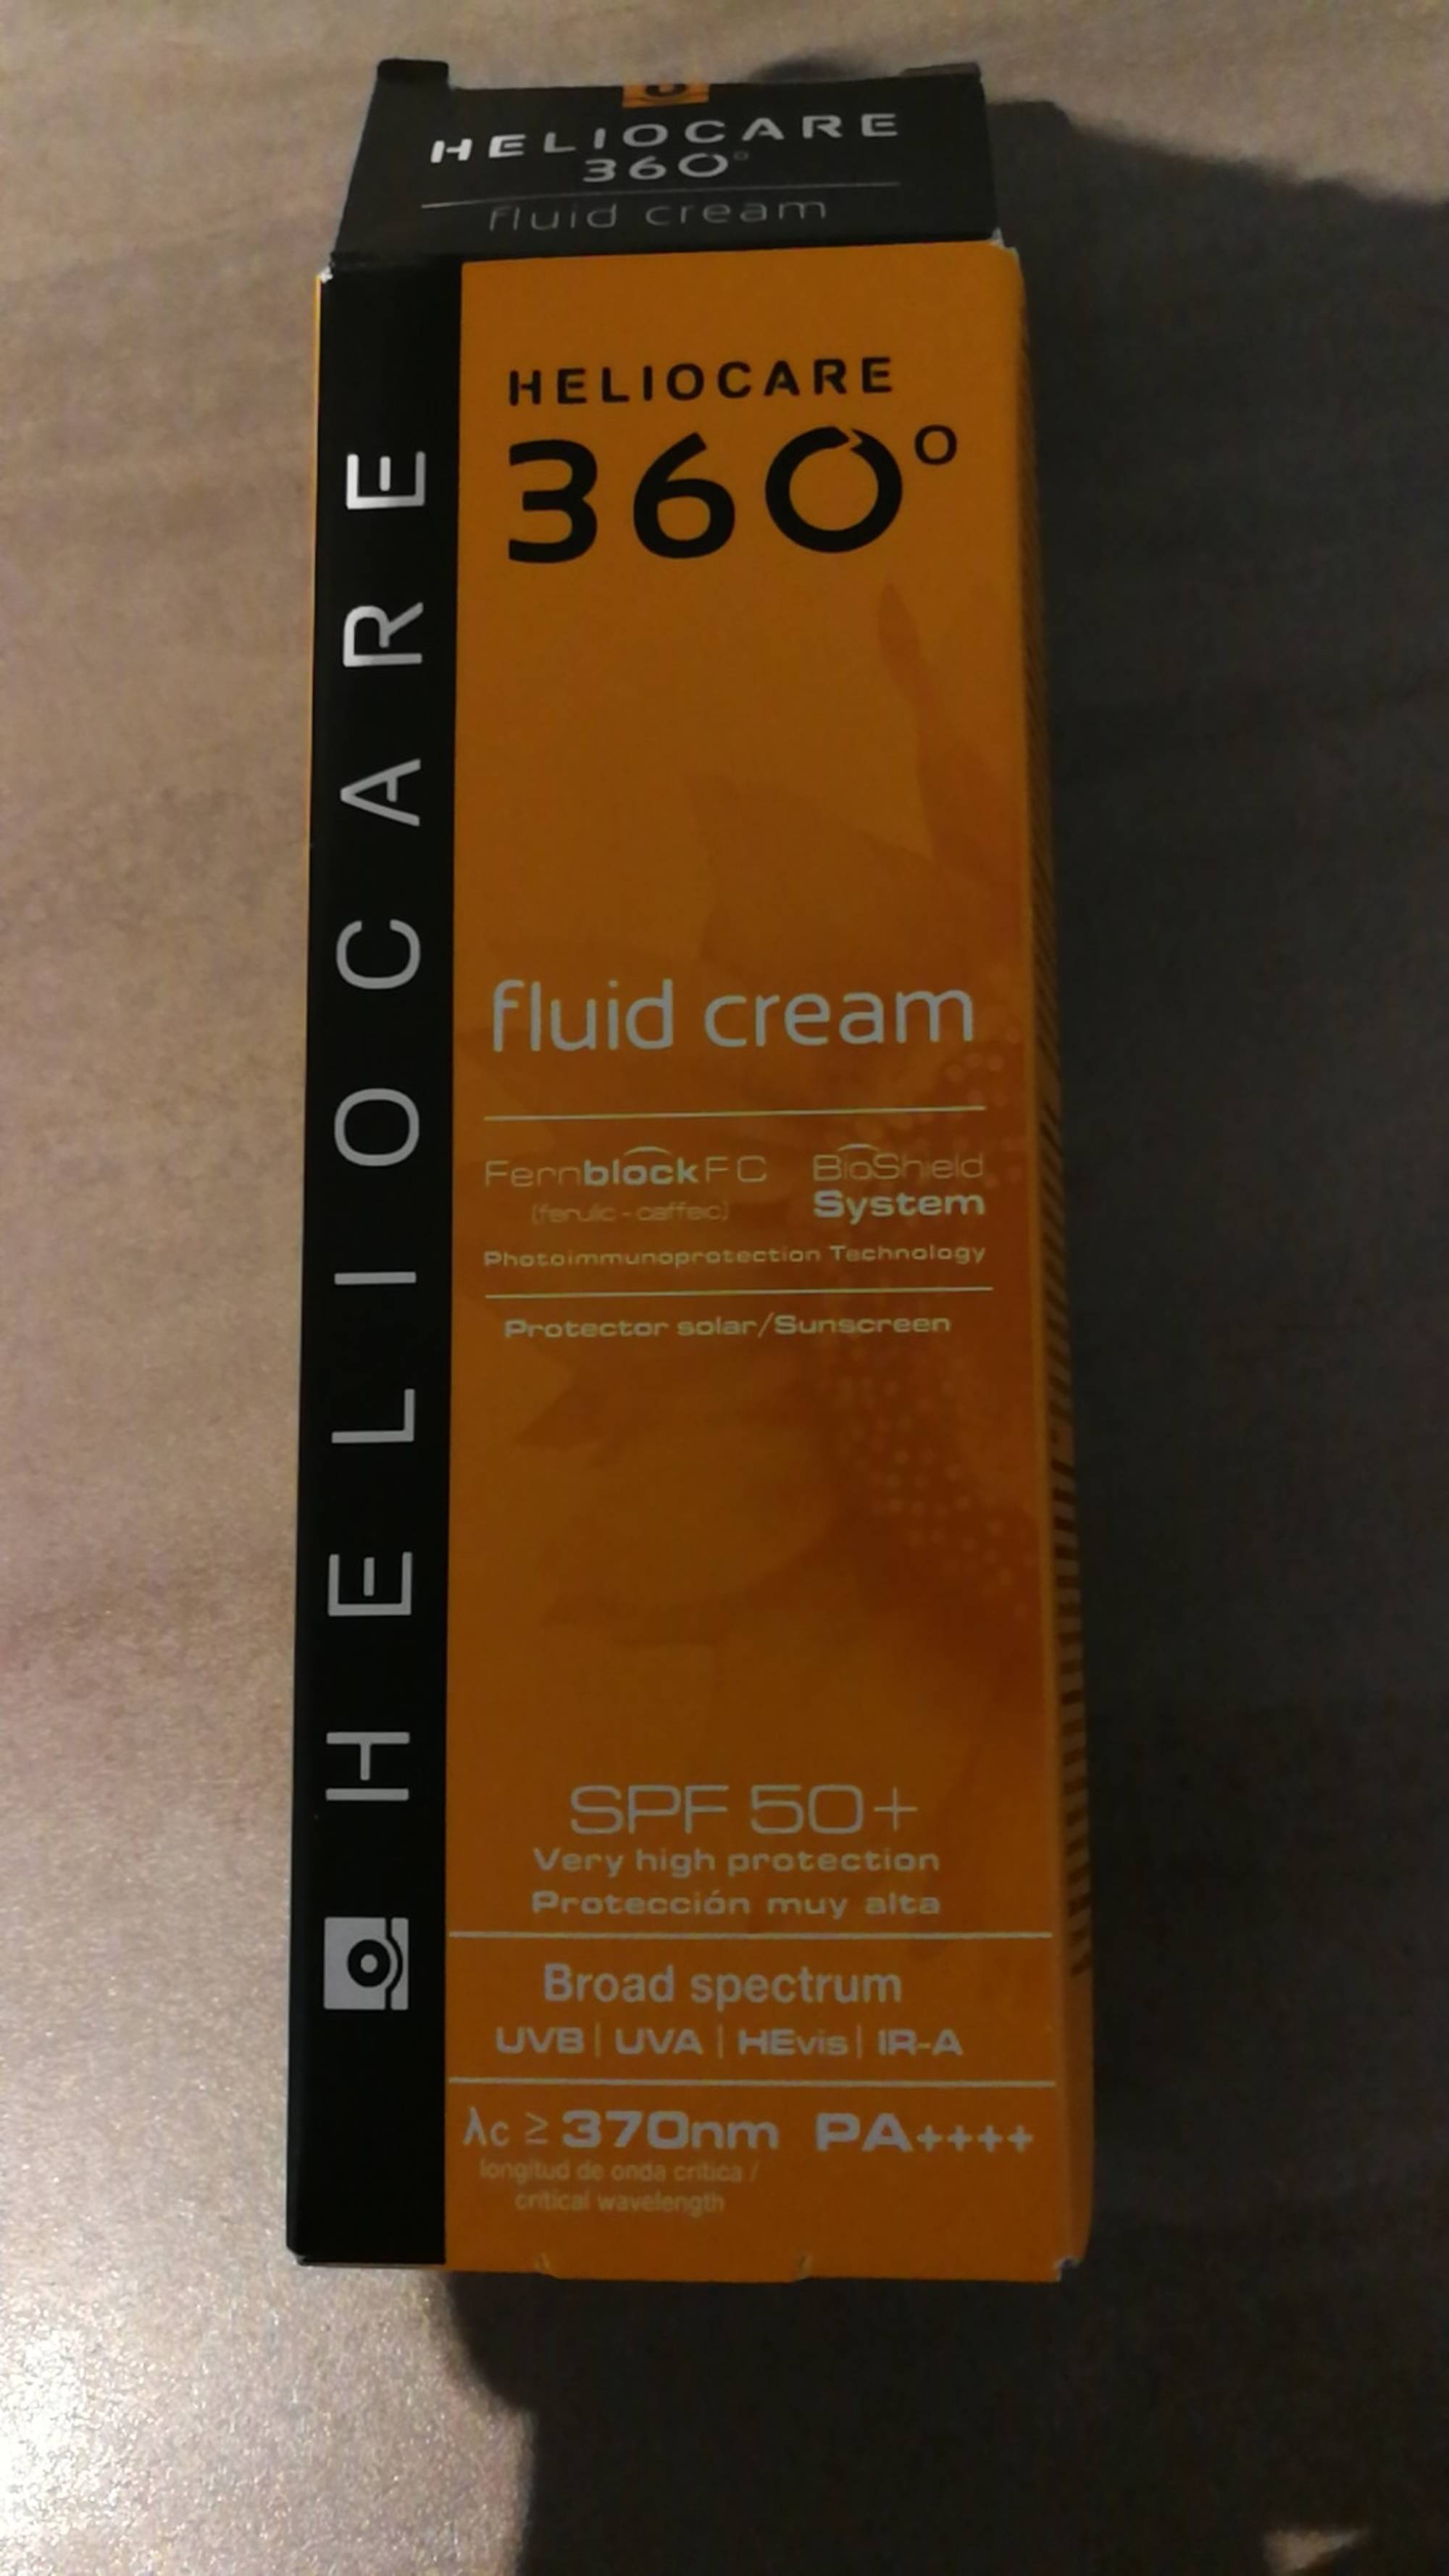 HELIOCARE - 360° - Fluid cream protector solar SPF 50+